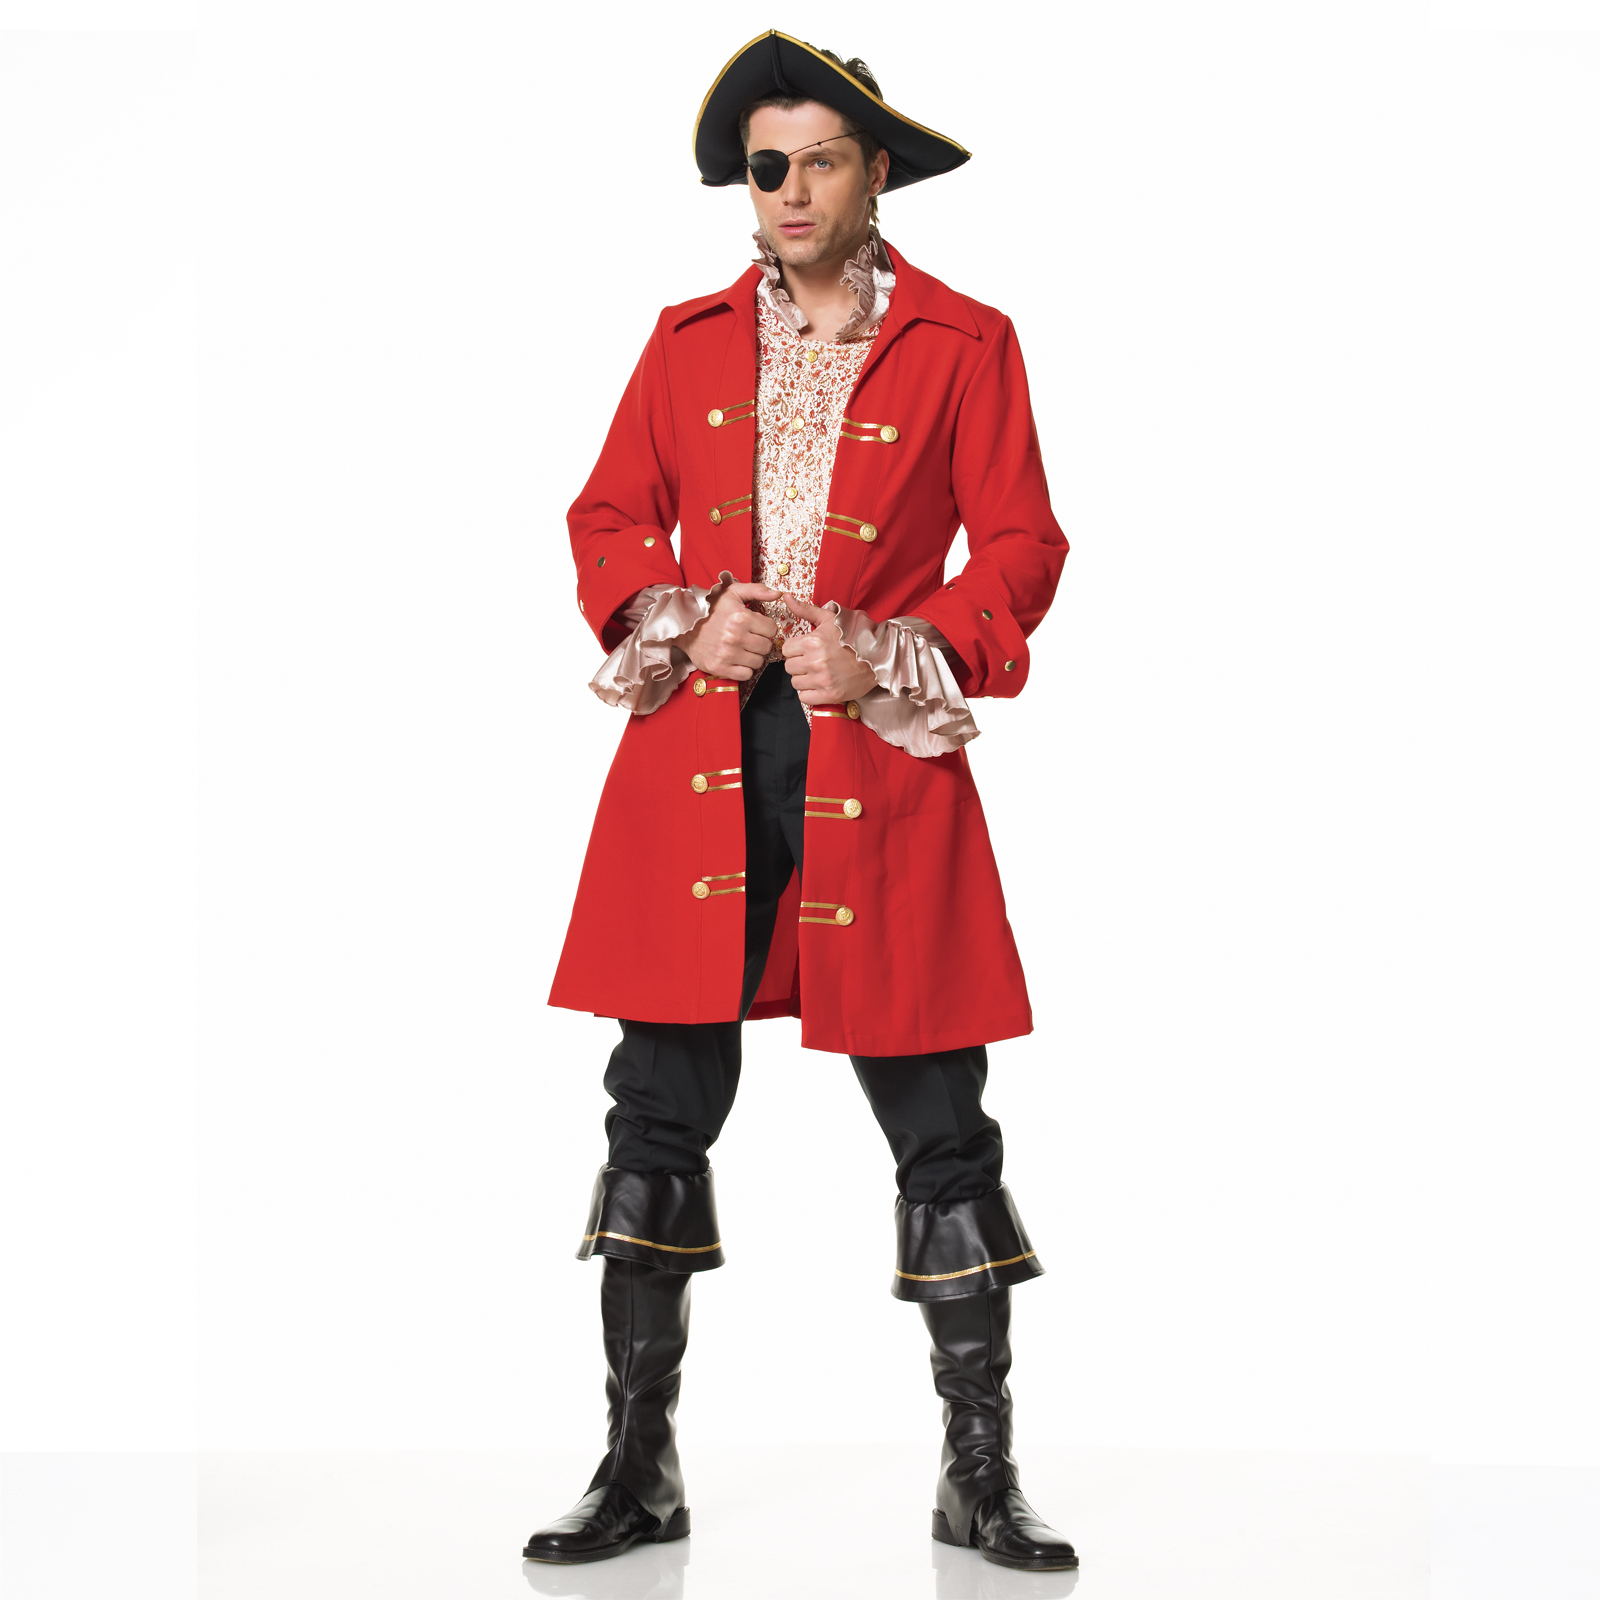 Leg Avenue Men's Pirate Captain Adult Costume - M/L